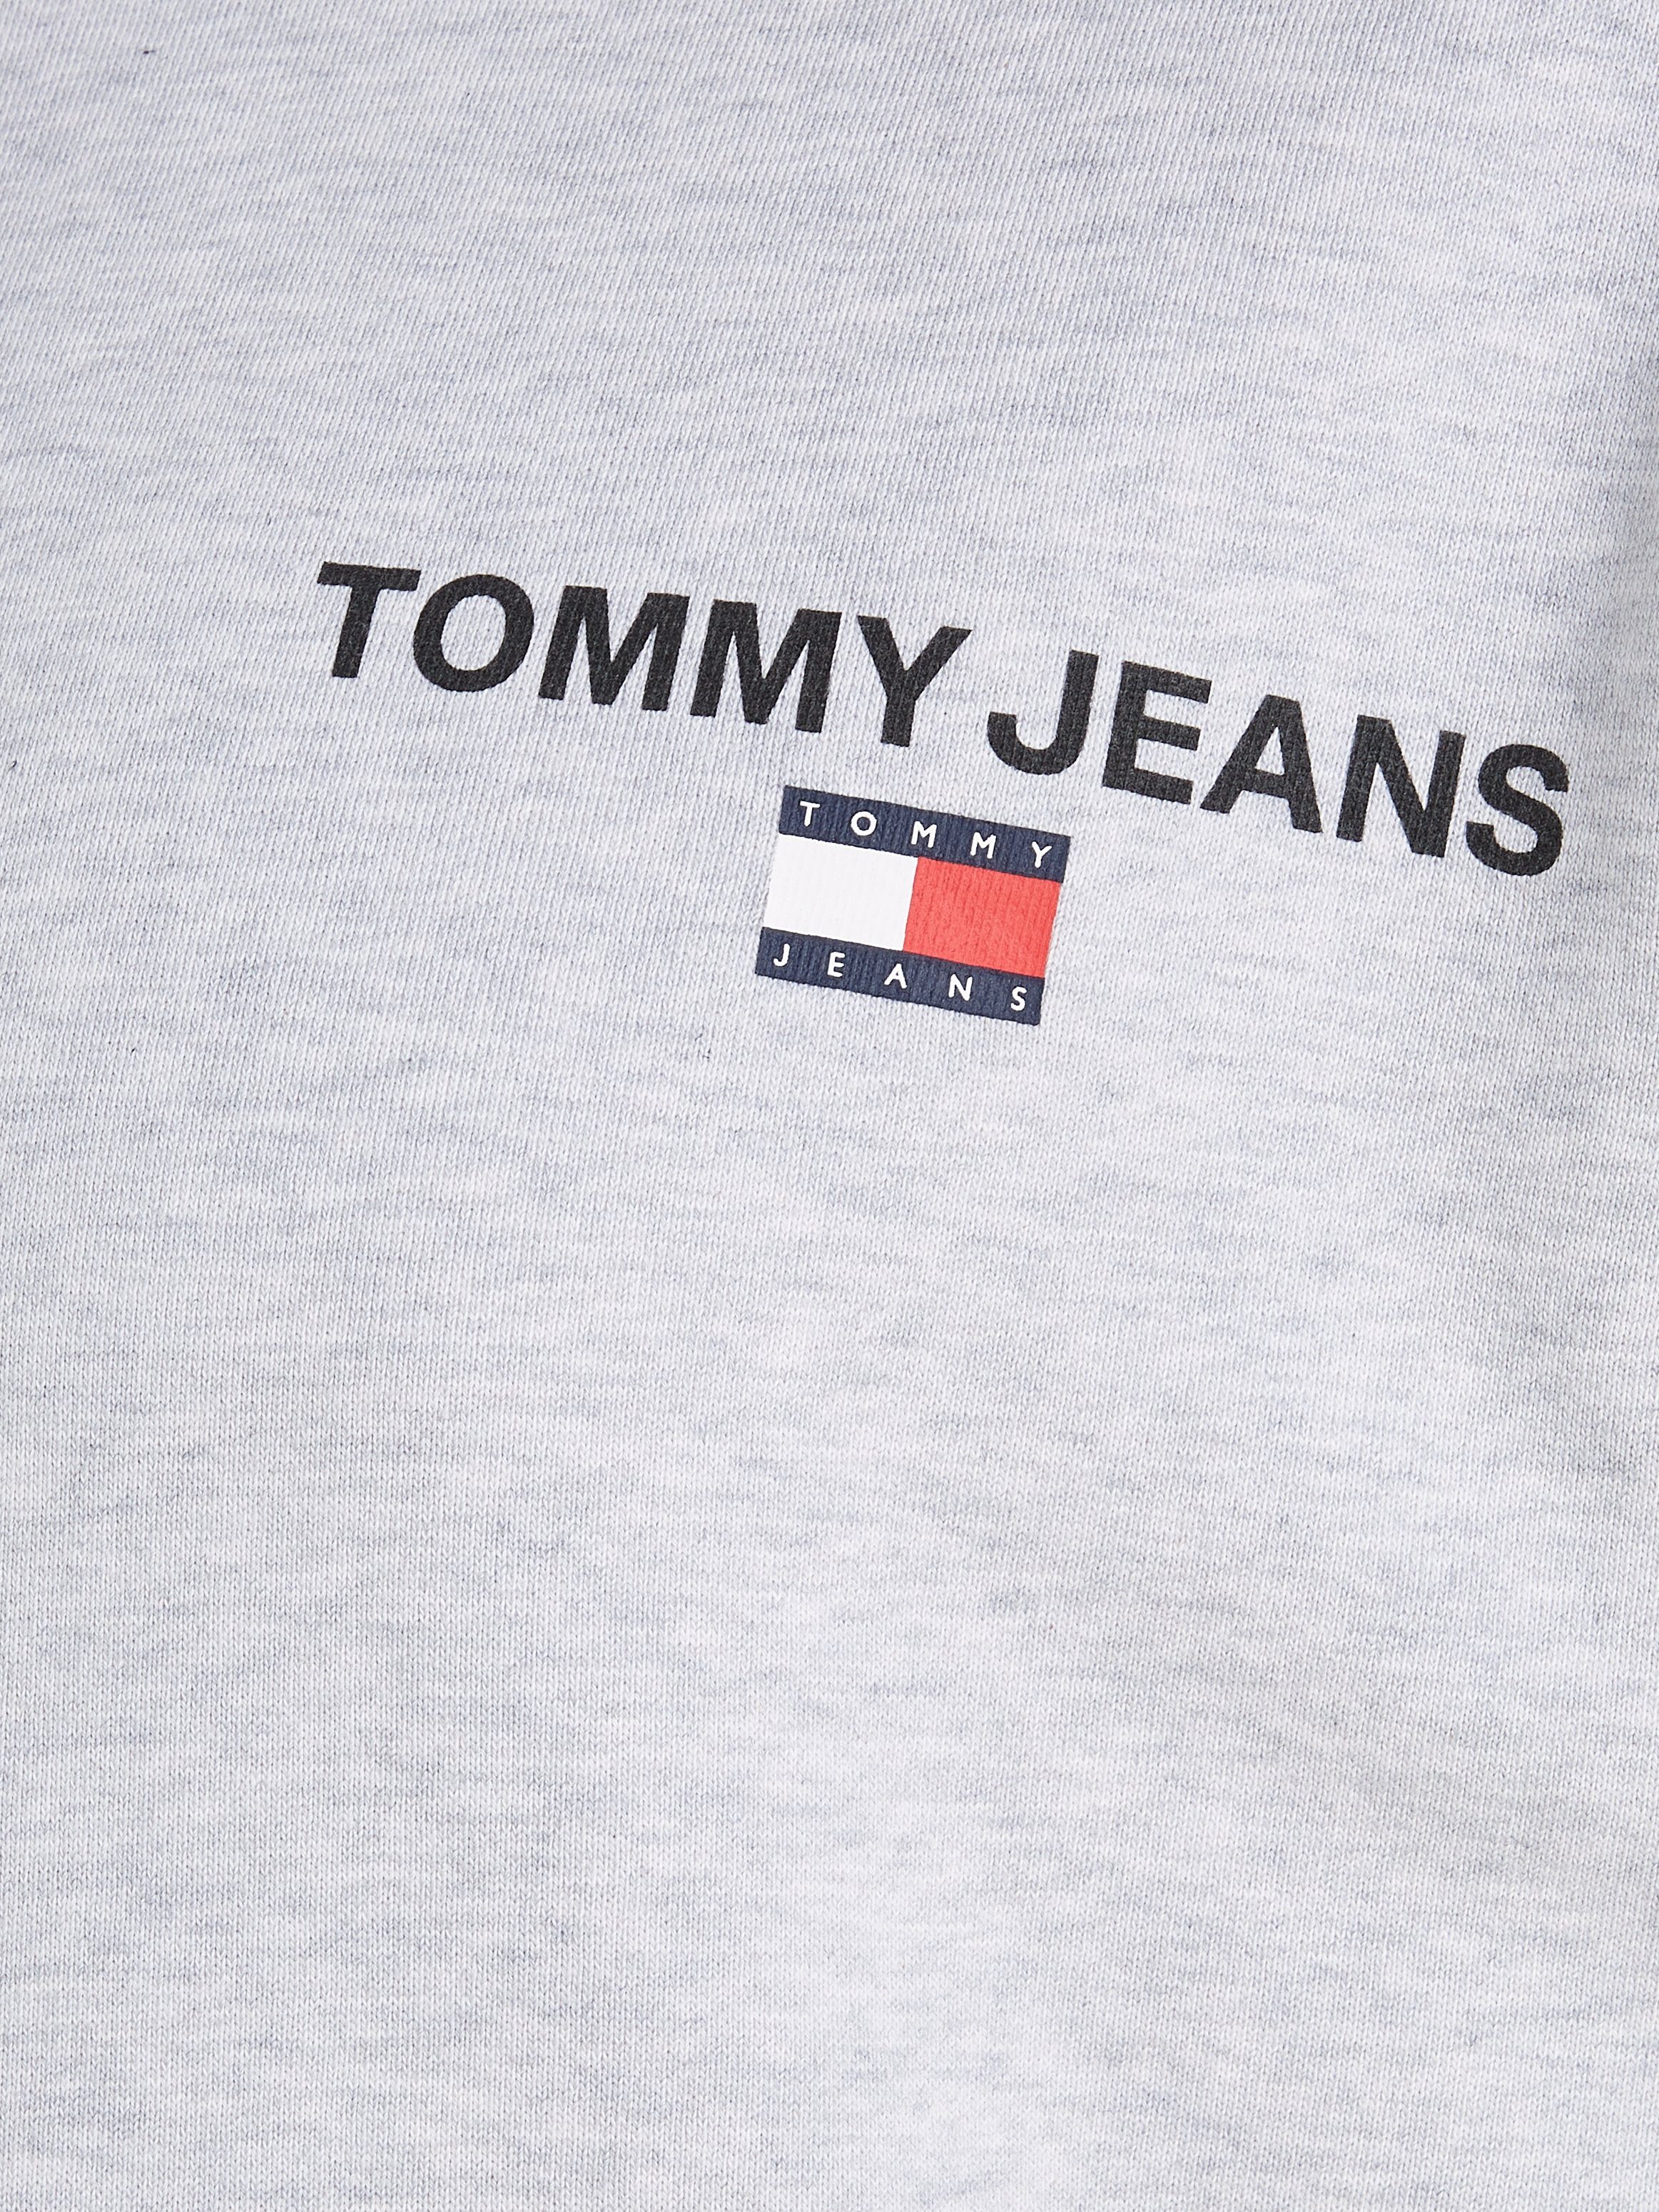 PLUS Jeans HOOD Plus Htr ENTRY Hoodie GRAPHIC Tommy TJM Grey Silver REG